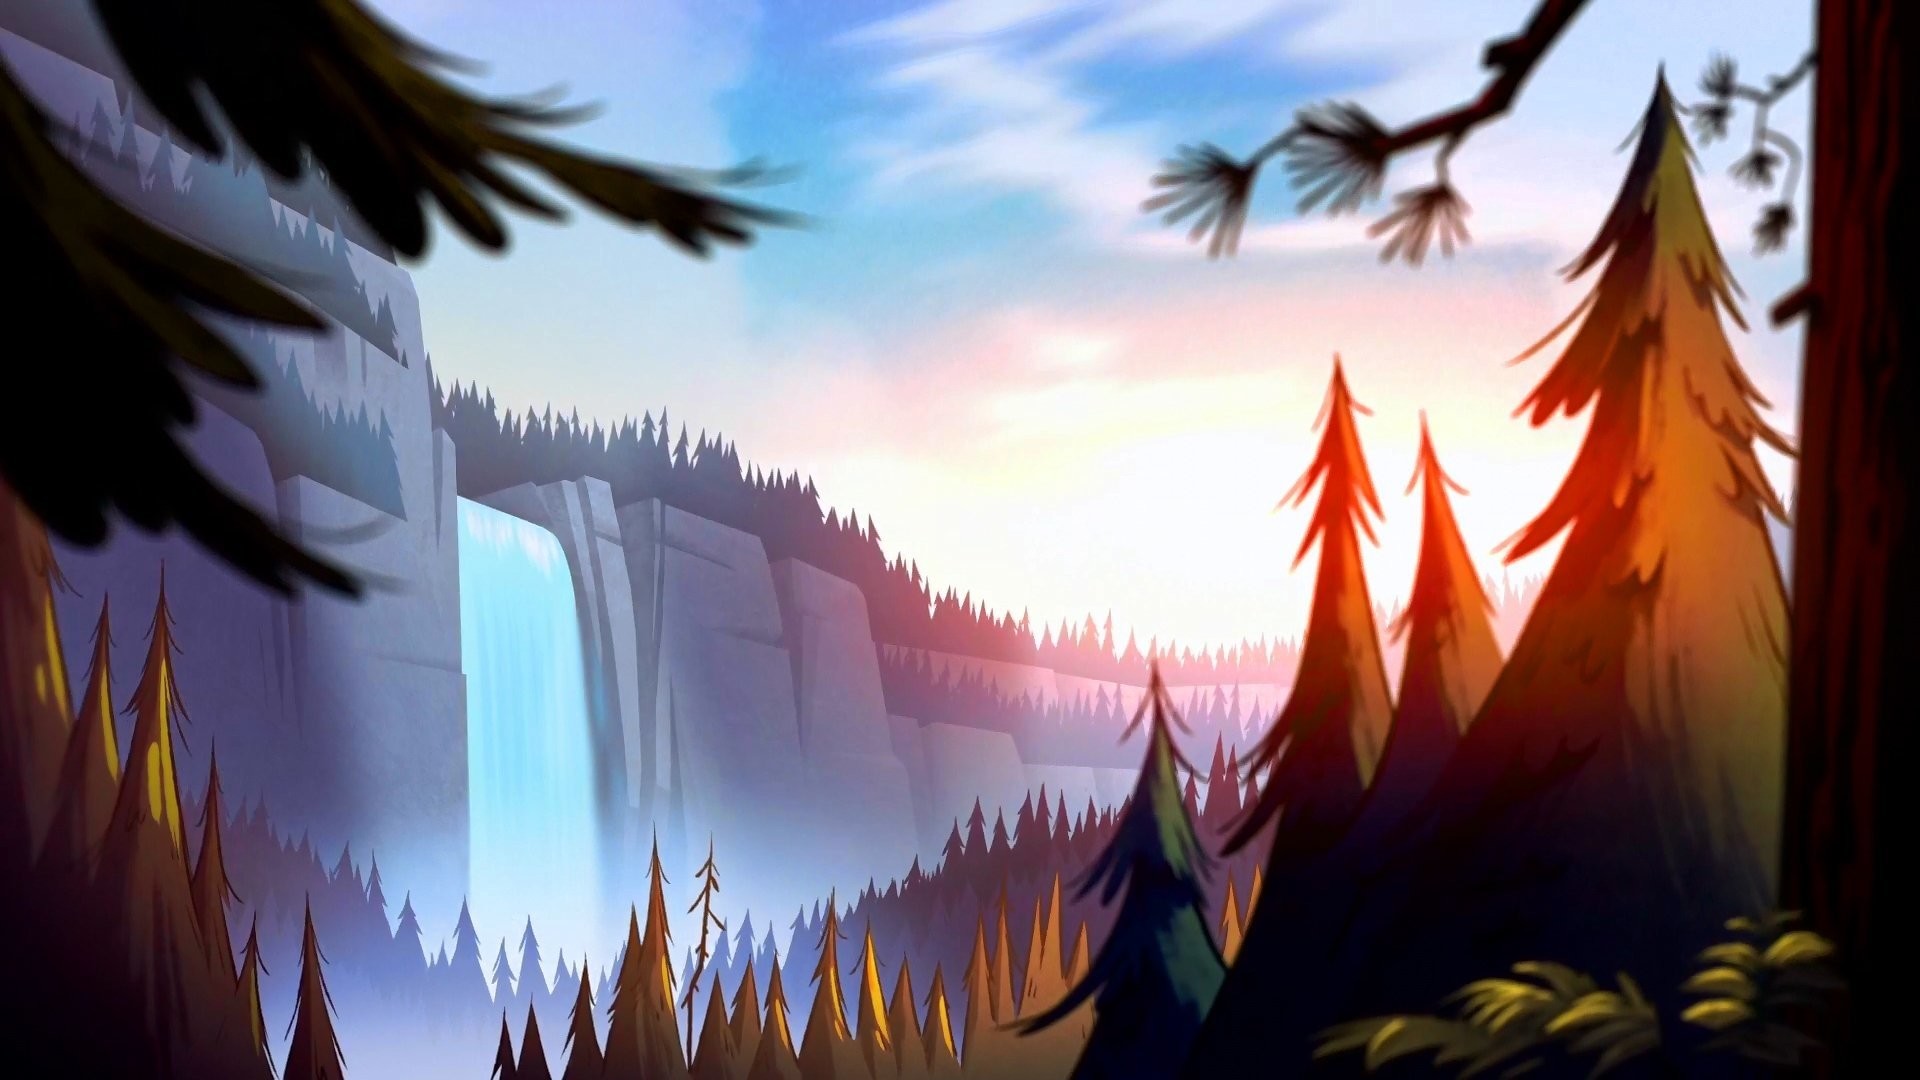 Gravity Falls HD Wallpaper Image